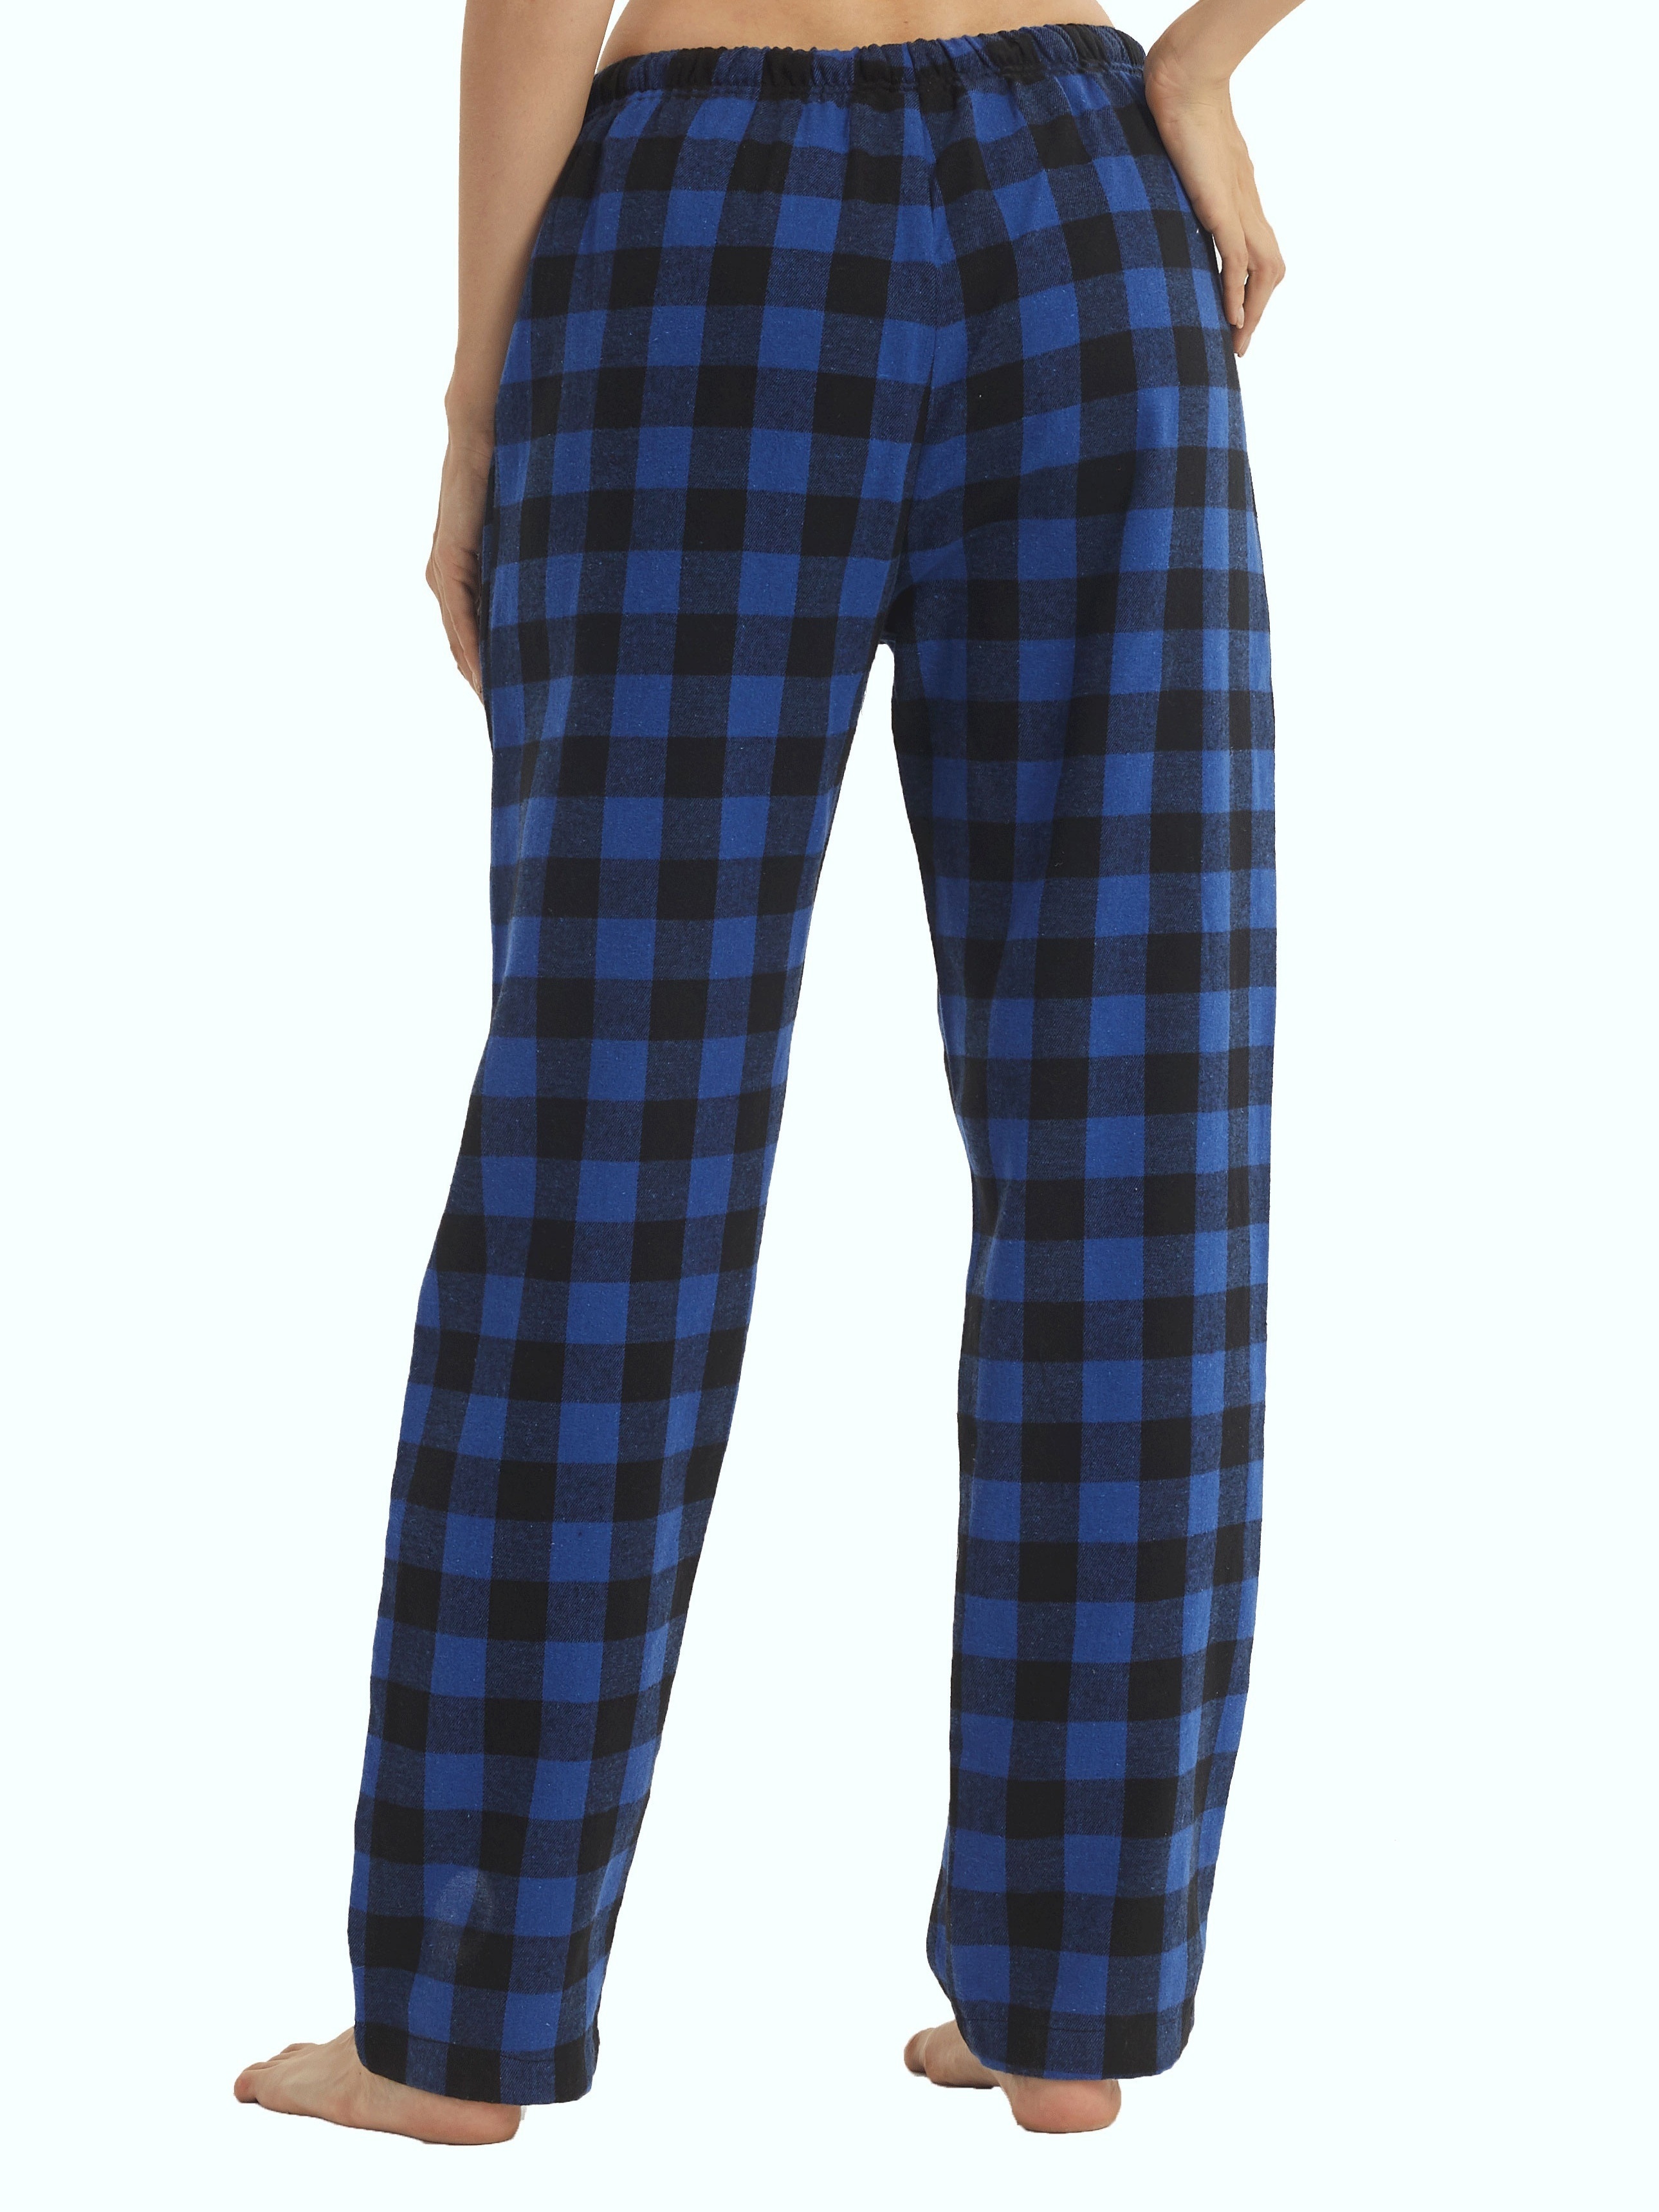 Plaid Print Pajamas Pants Soft Comfy Drawstring Lounge Pants